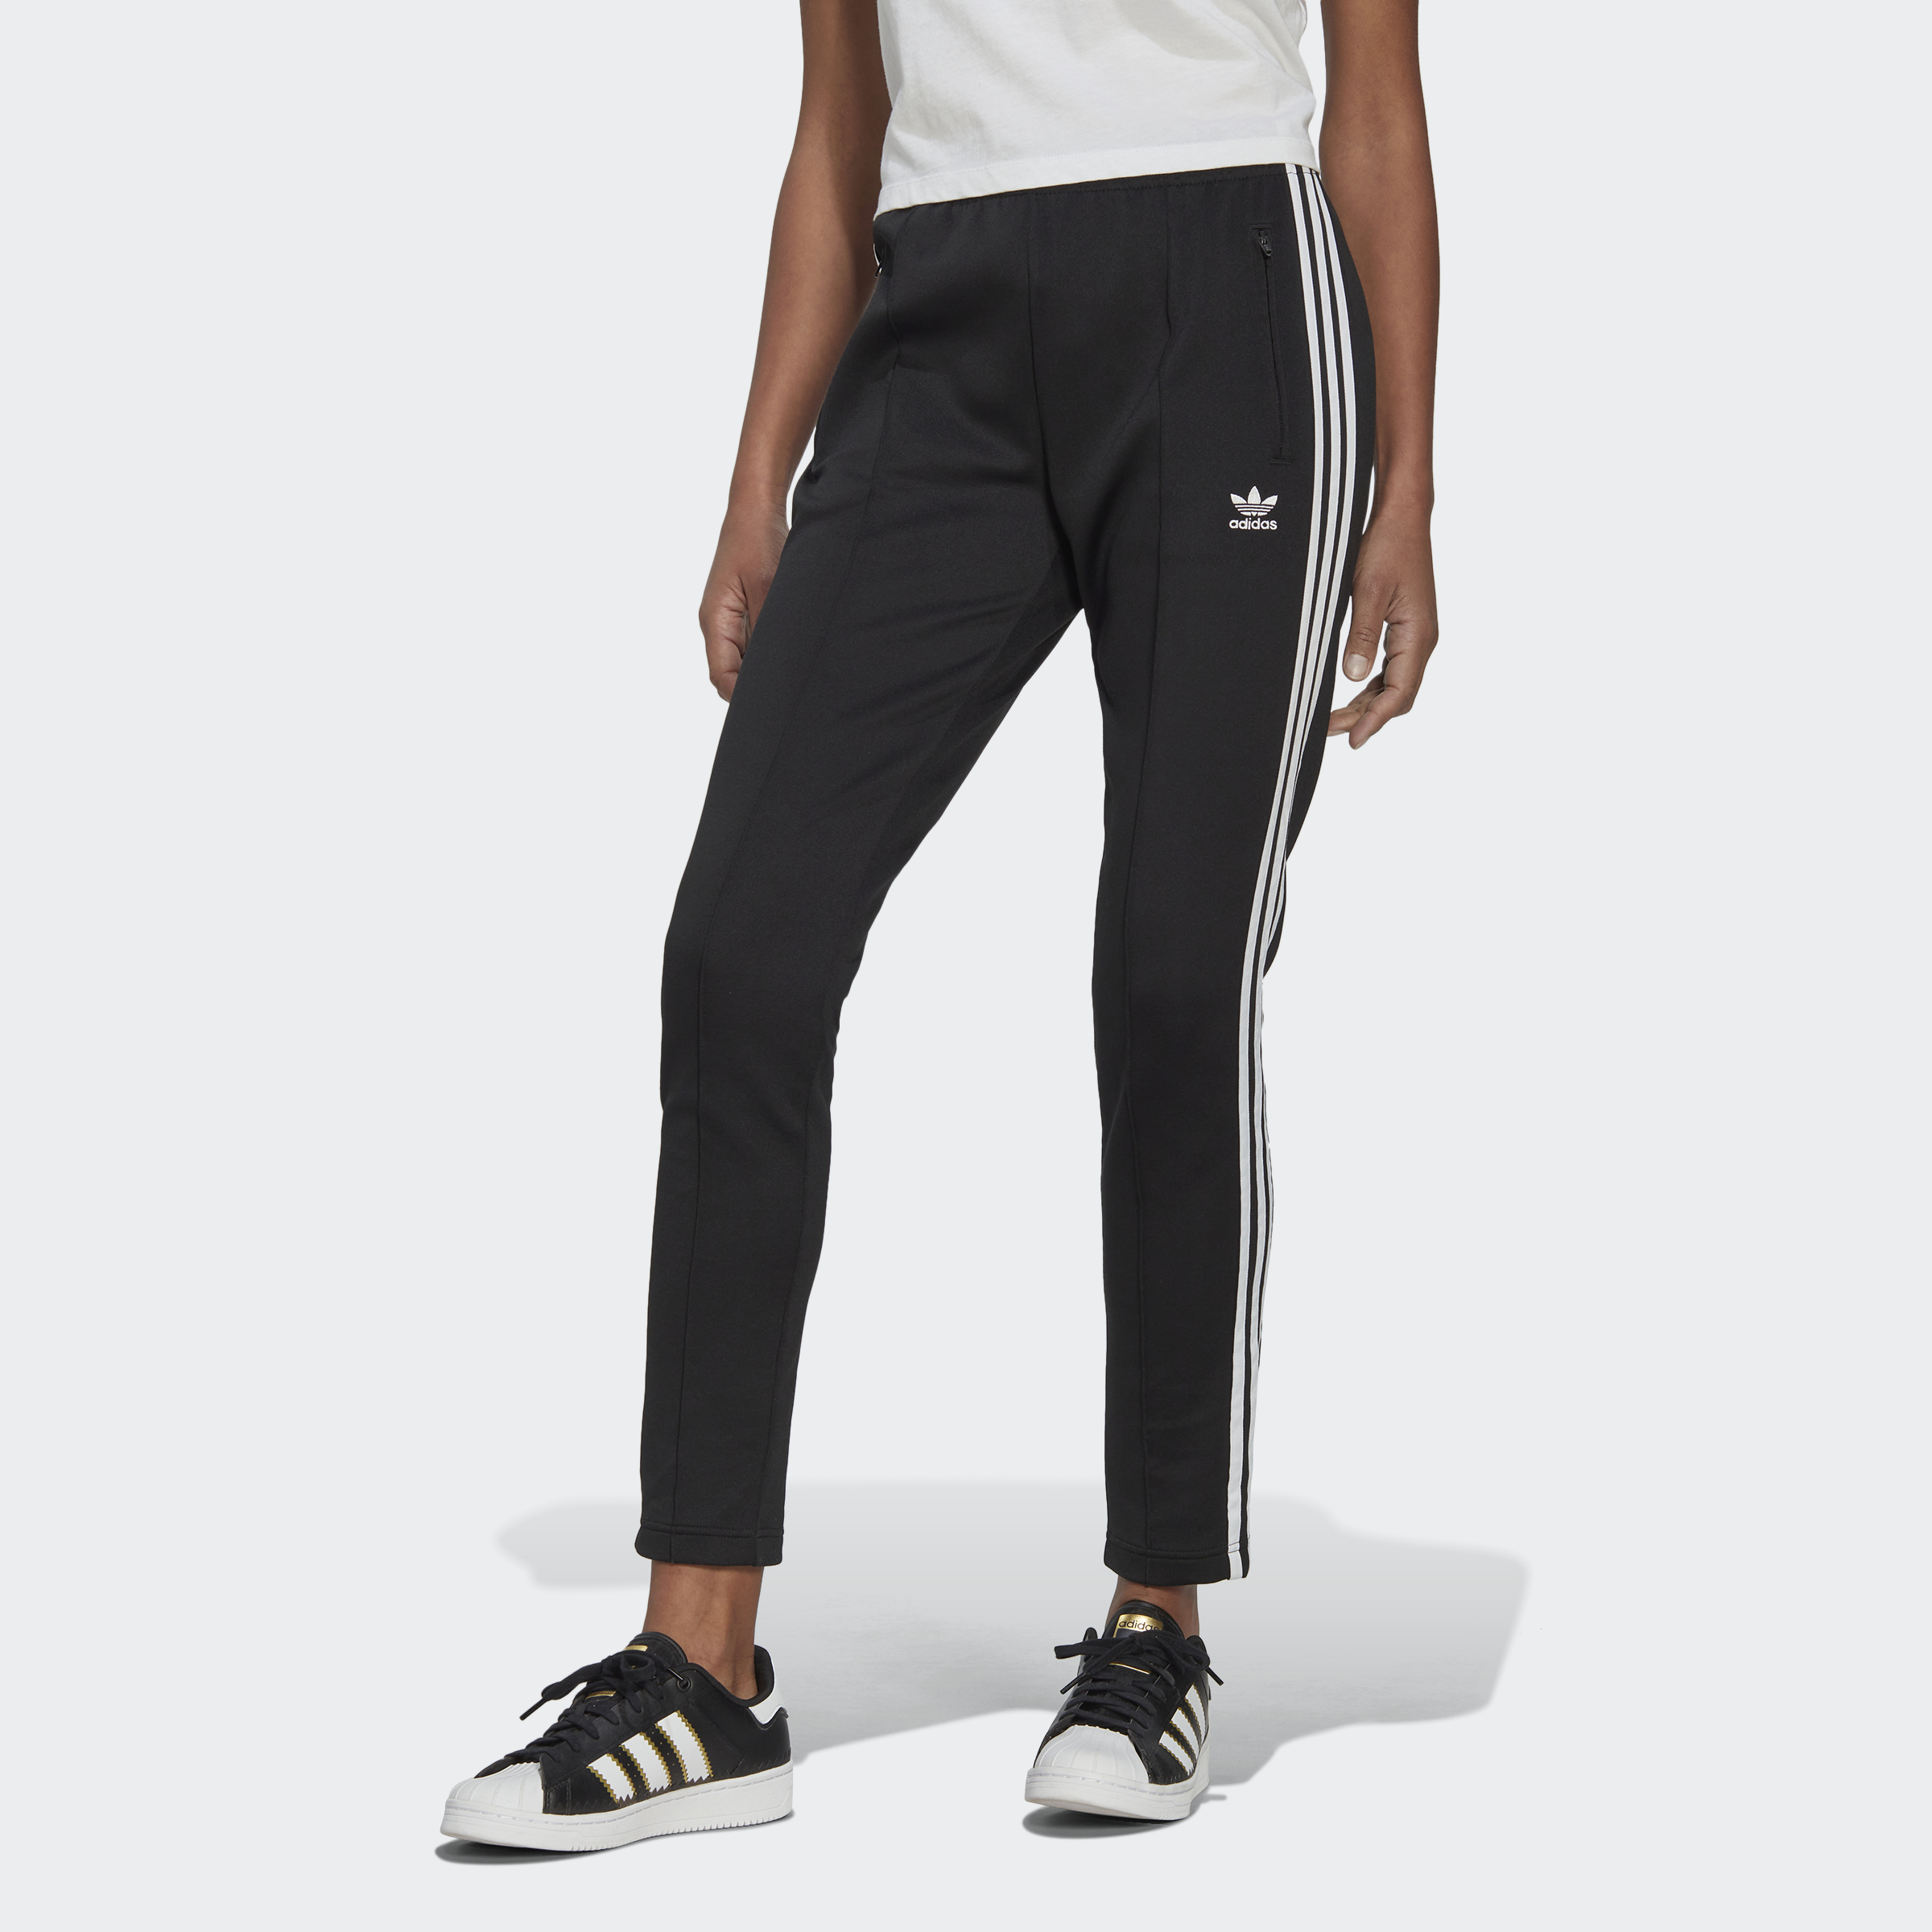 Women's Adidas Slim Fit Leg Track Pant Size M - Black/White sale | eBay